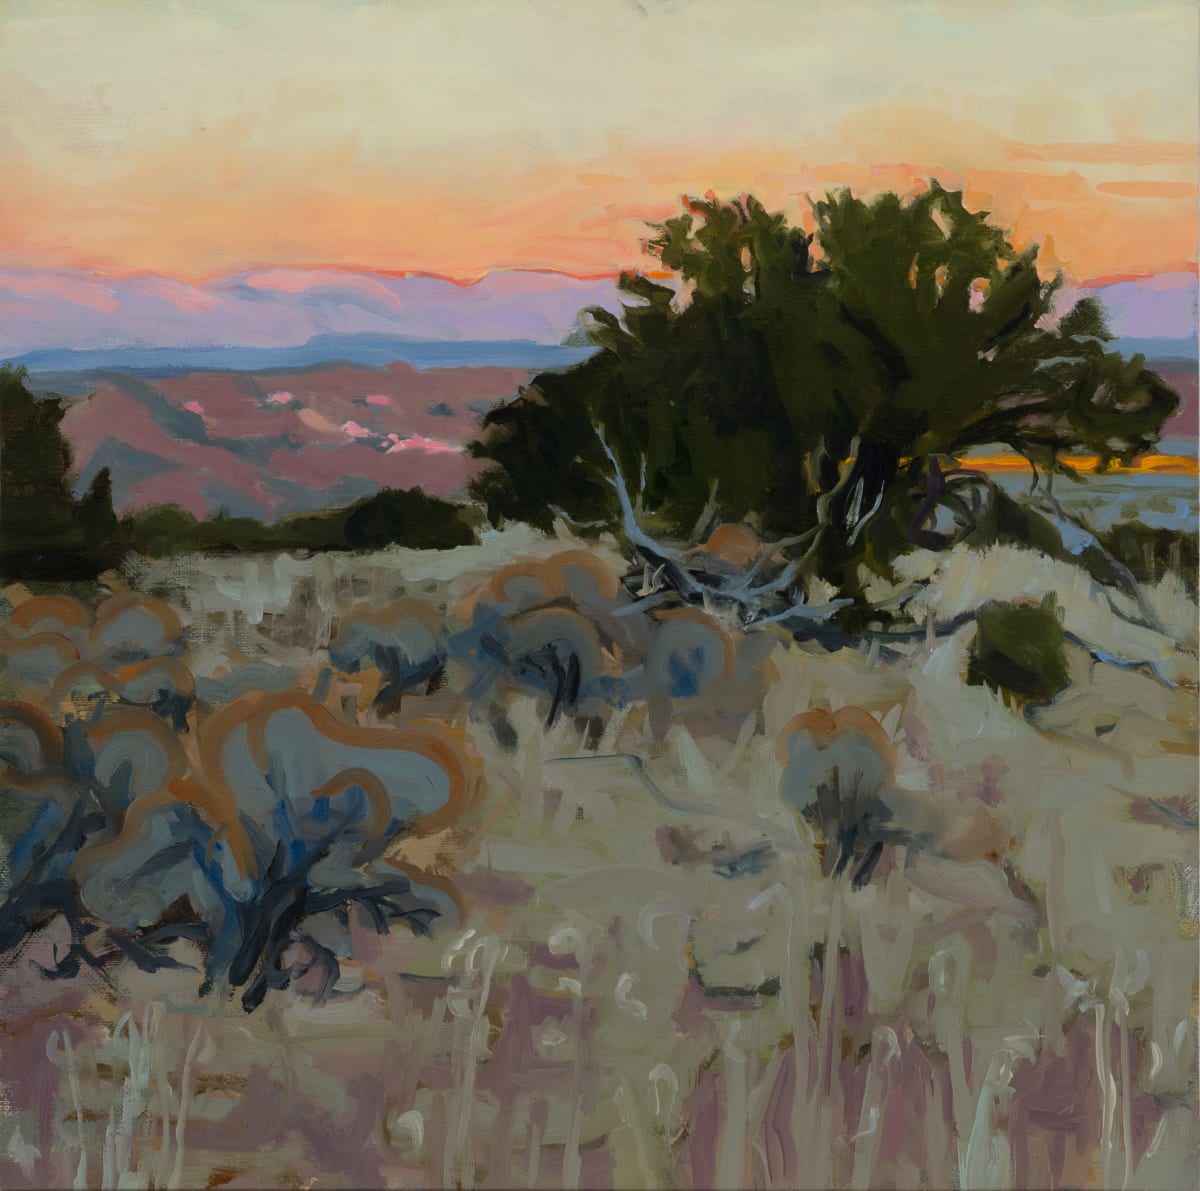 El Rito Mesa Sunset  Image: Plein air - then studio from memory